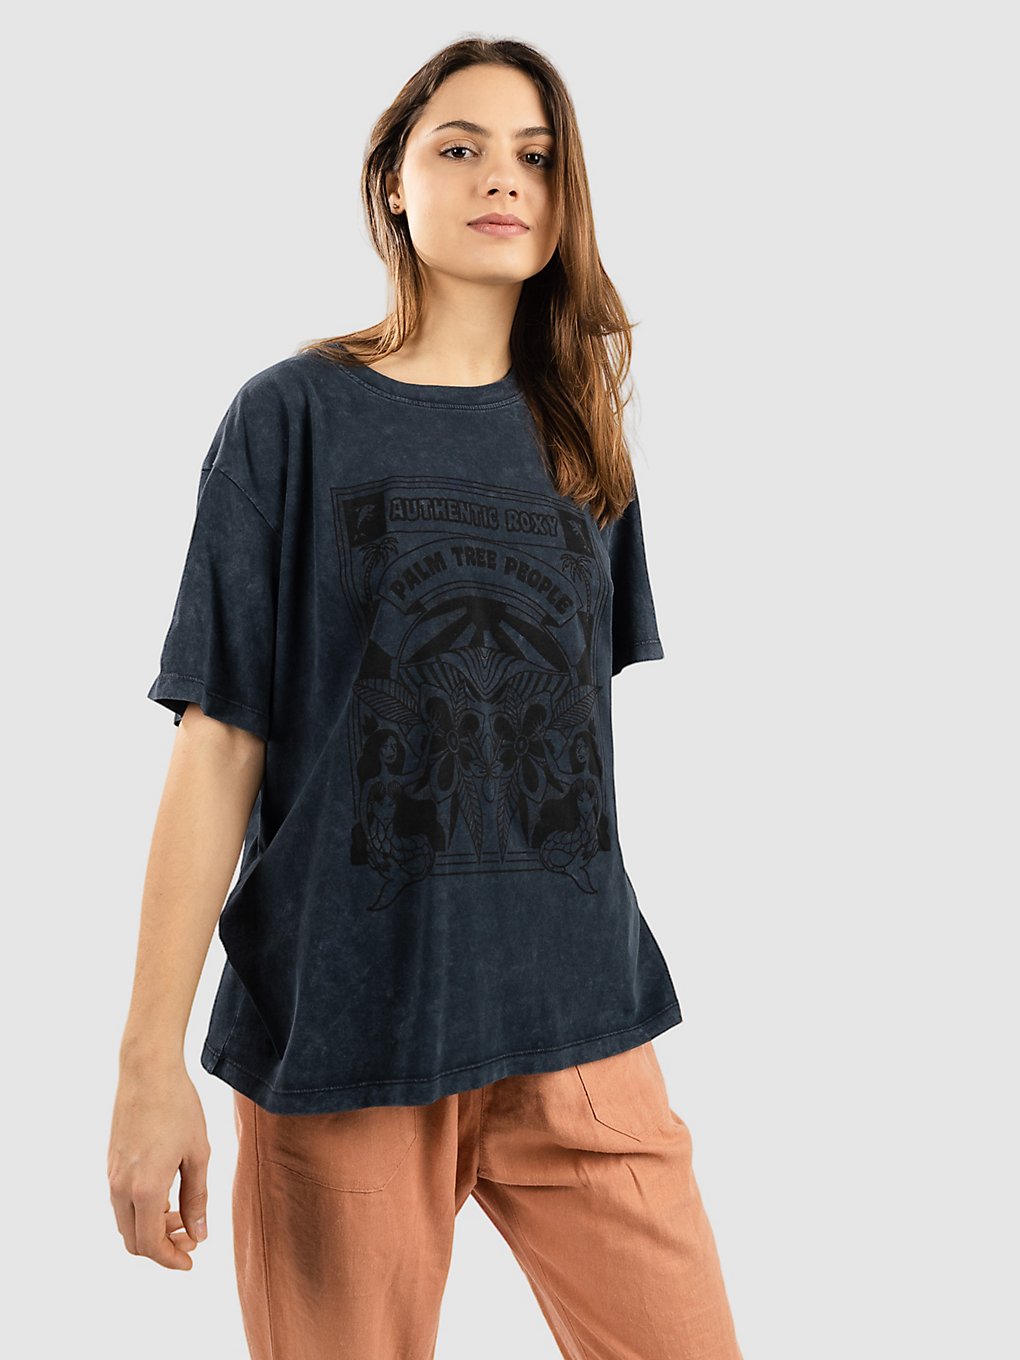 Roxy Moonlight Sunset T-Shirt anthracite kaufen